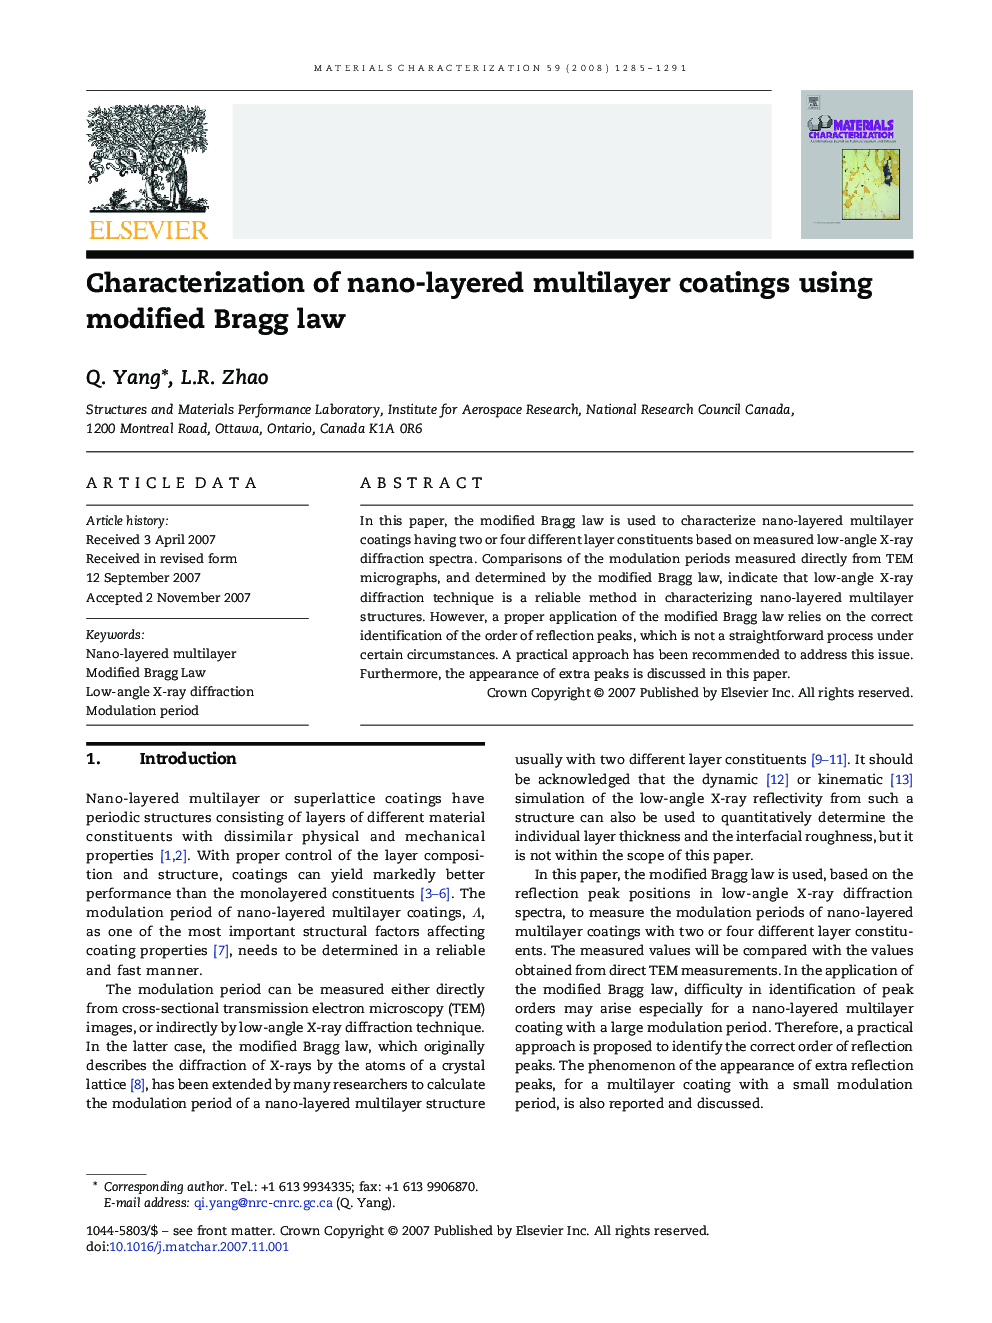 Characterization of nano-layered multilayer coatings using modified Bragg law